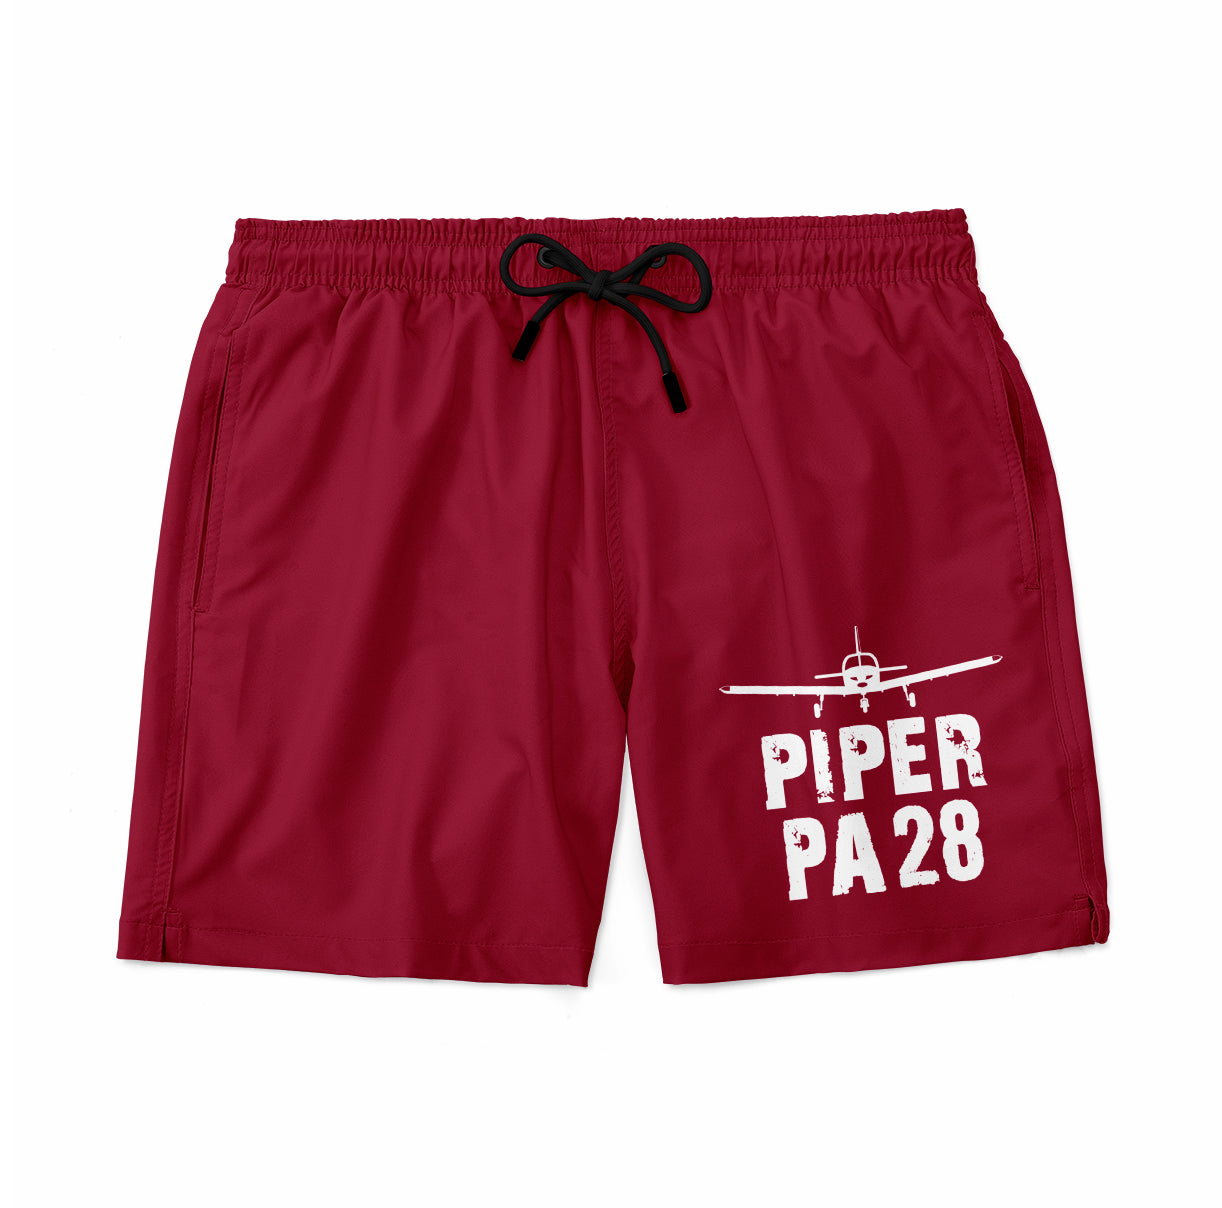 Piper PA28 & Plane Designed Swim Trunks & Shorts